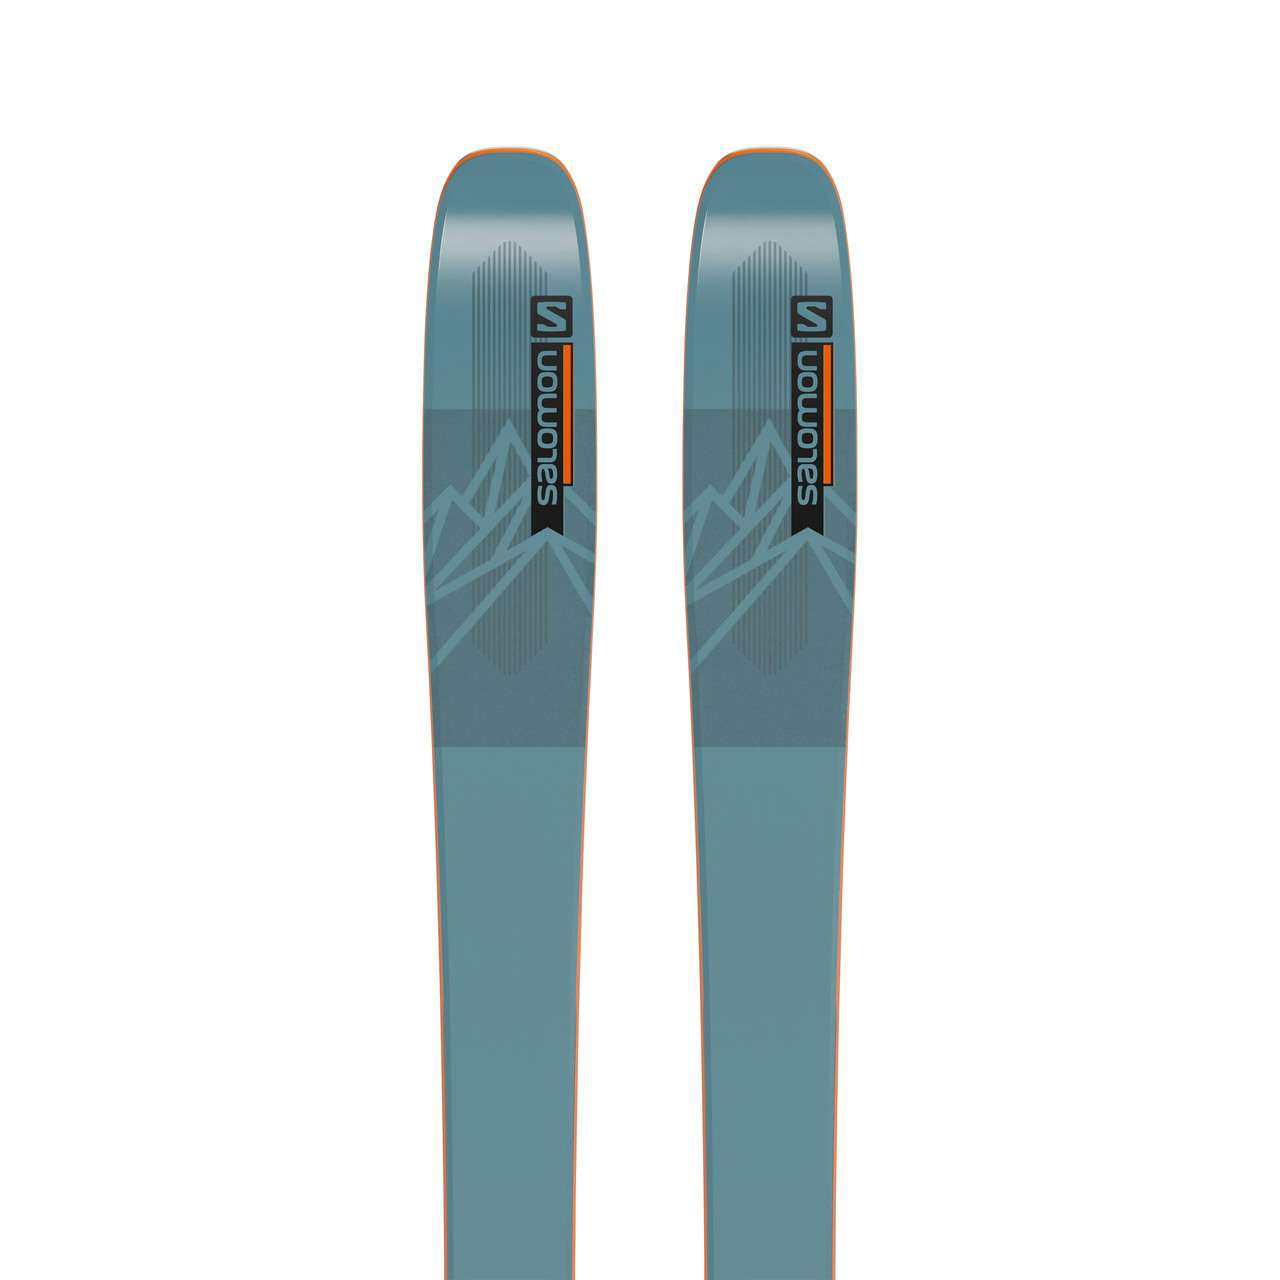 QST 98 Skis Blue/Orange